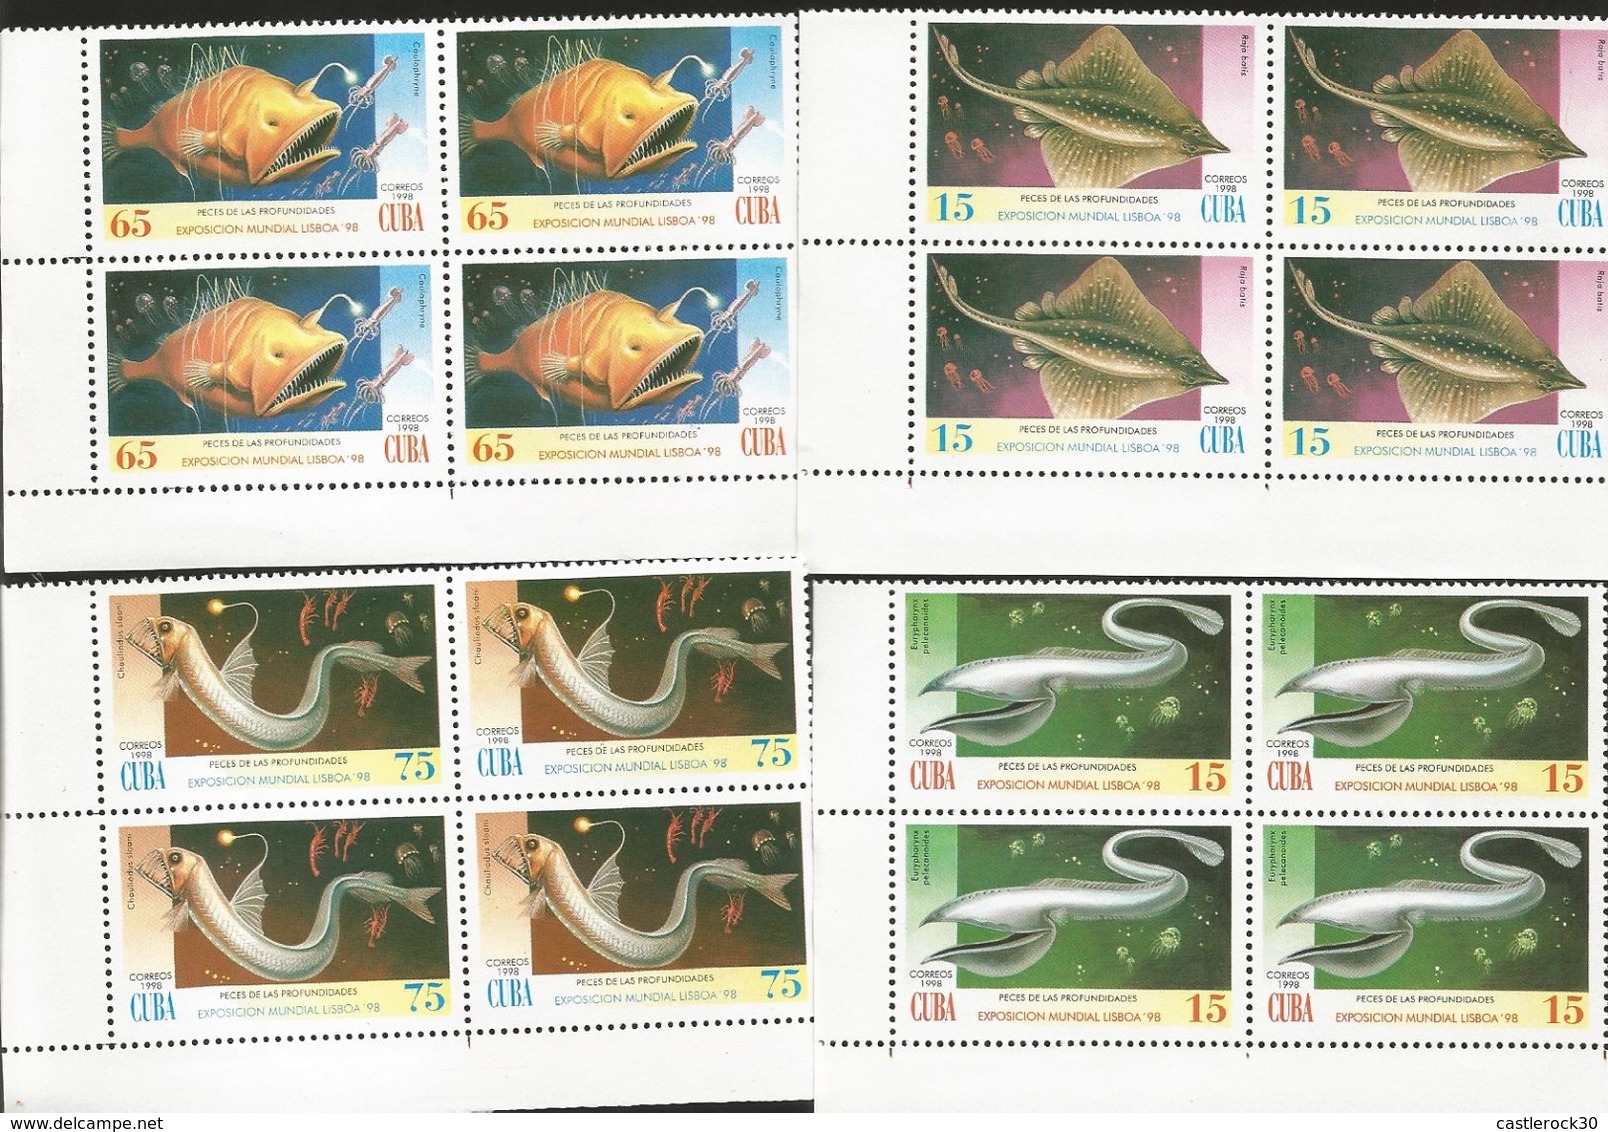 J) 1998 CUBA-CARIBE, WORLD LISBON EXHIBITION 98, FISH OF DEPTHS, SET OF 4 BLOCK OF 4 MNH - Covers & Documents